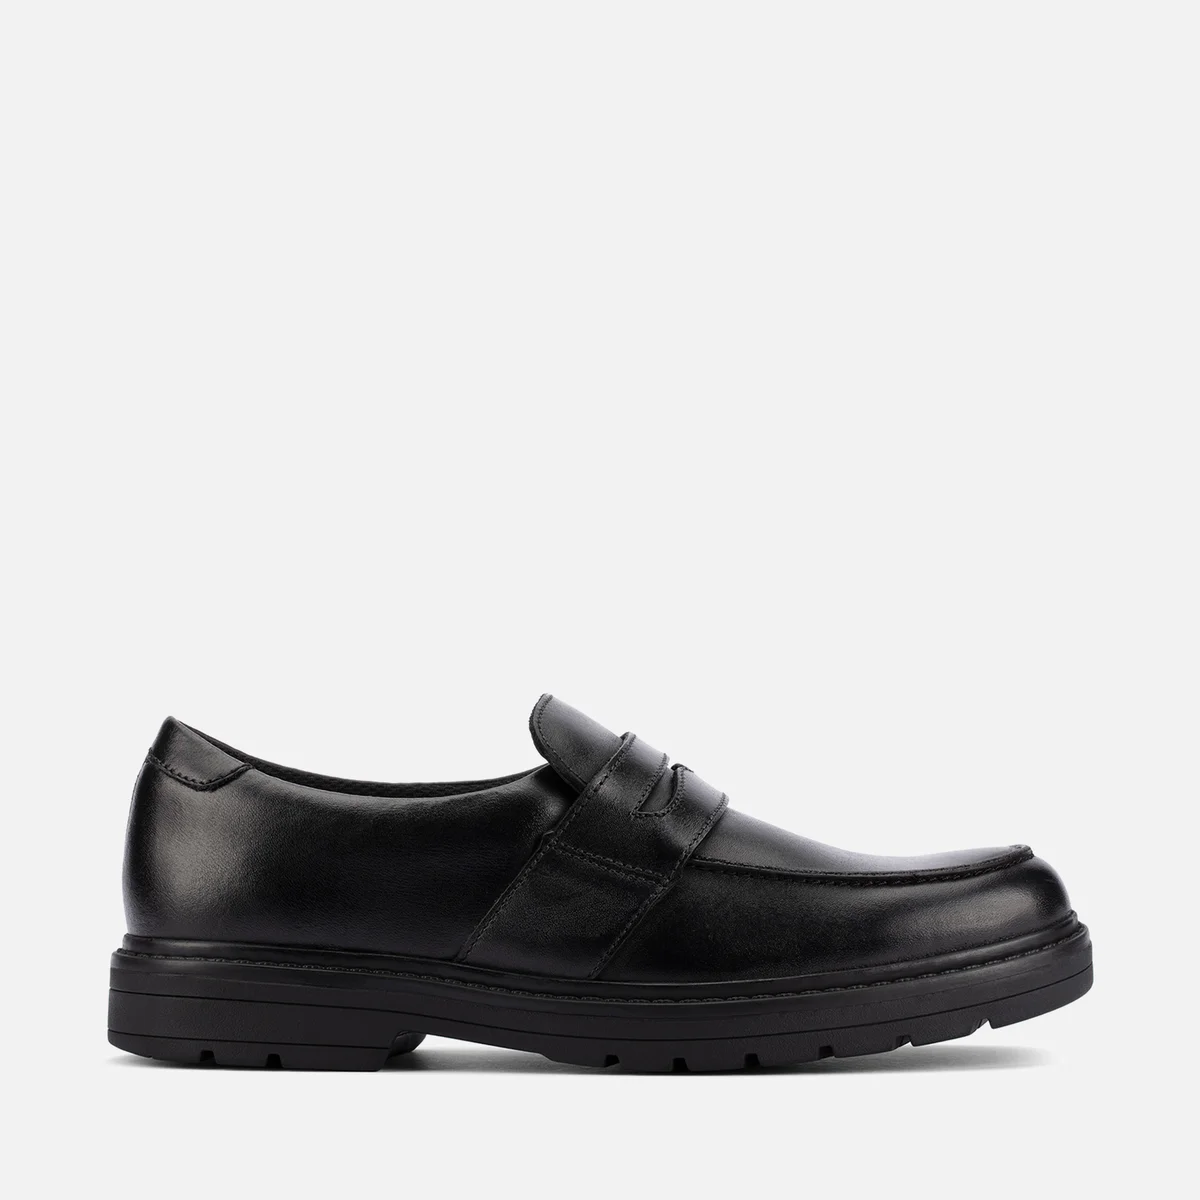 Clarks Youth Loxham Craft School Shoes - Black Leather Image 1